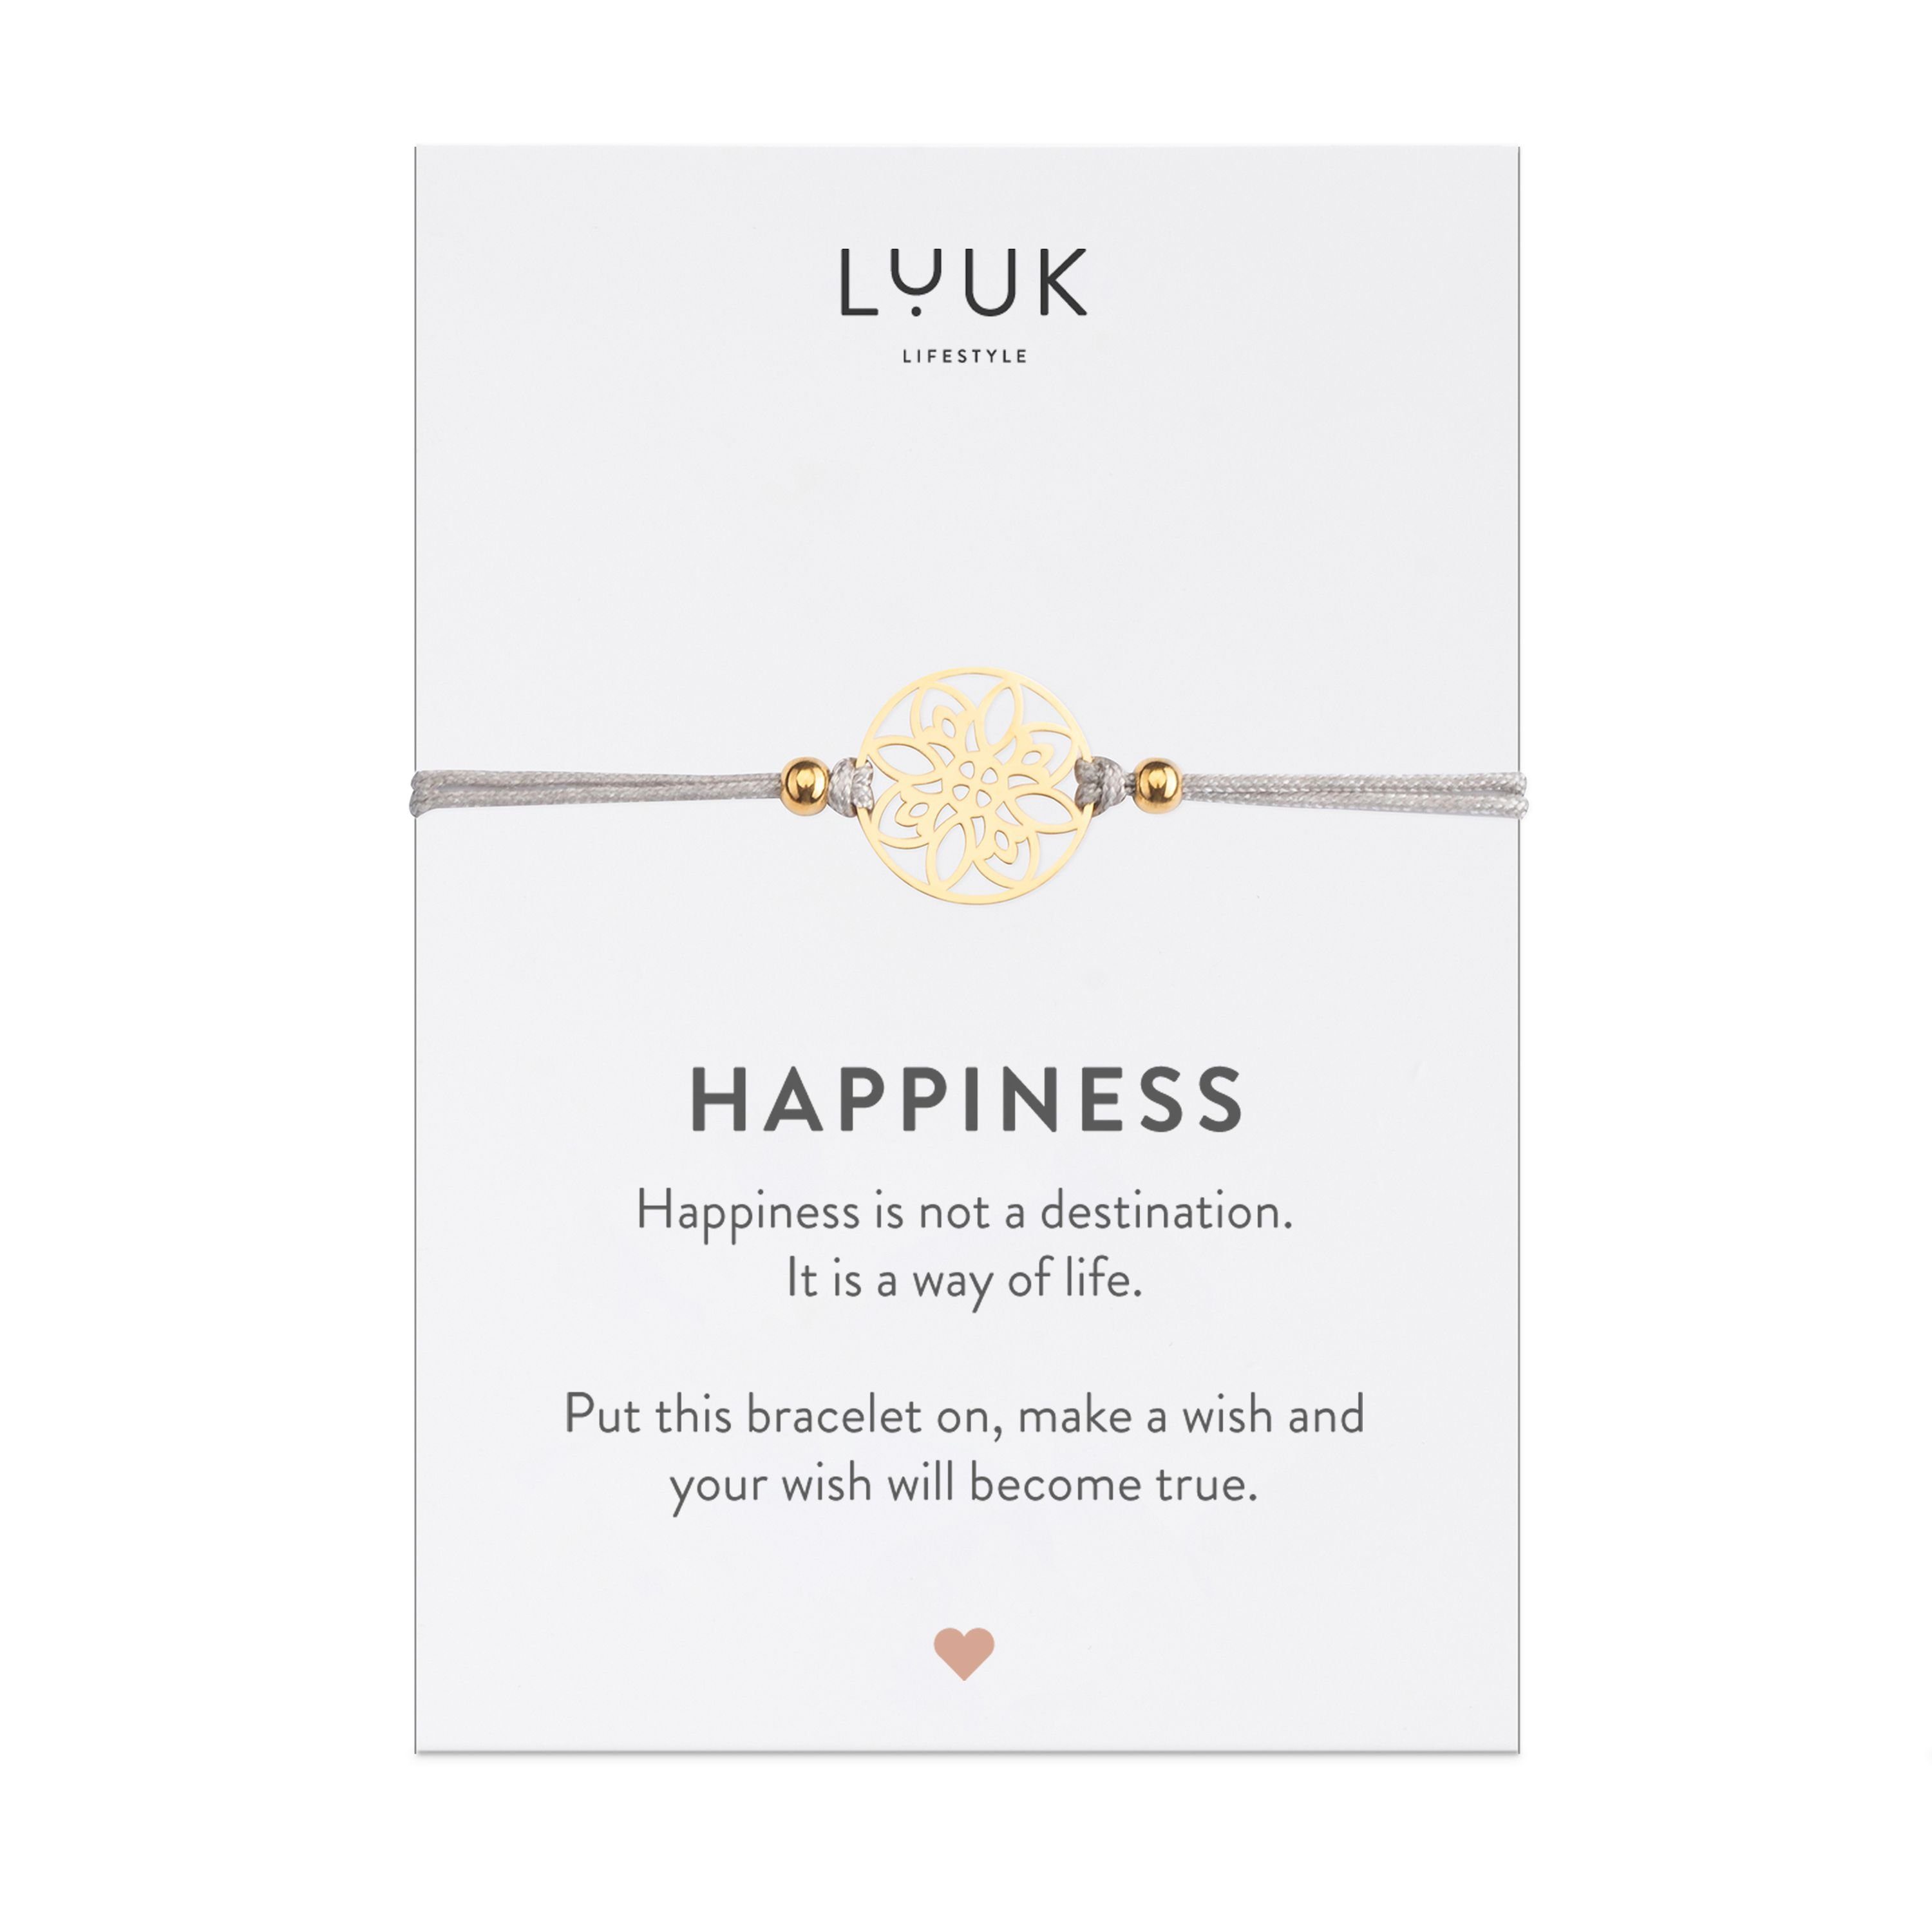 LUUK LIFESTYLE Freundschaftsarmband Blume, handmade, mit Happiness Spruchkarte Gold